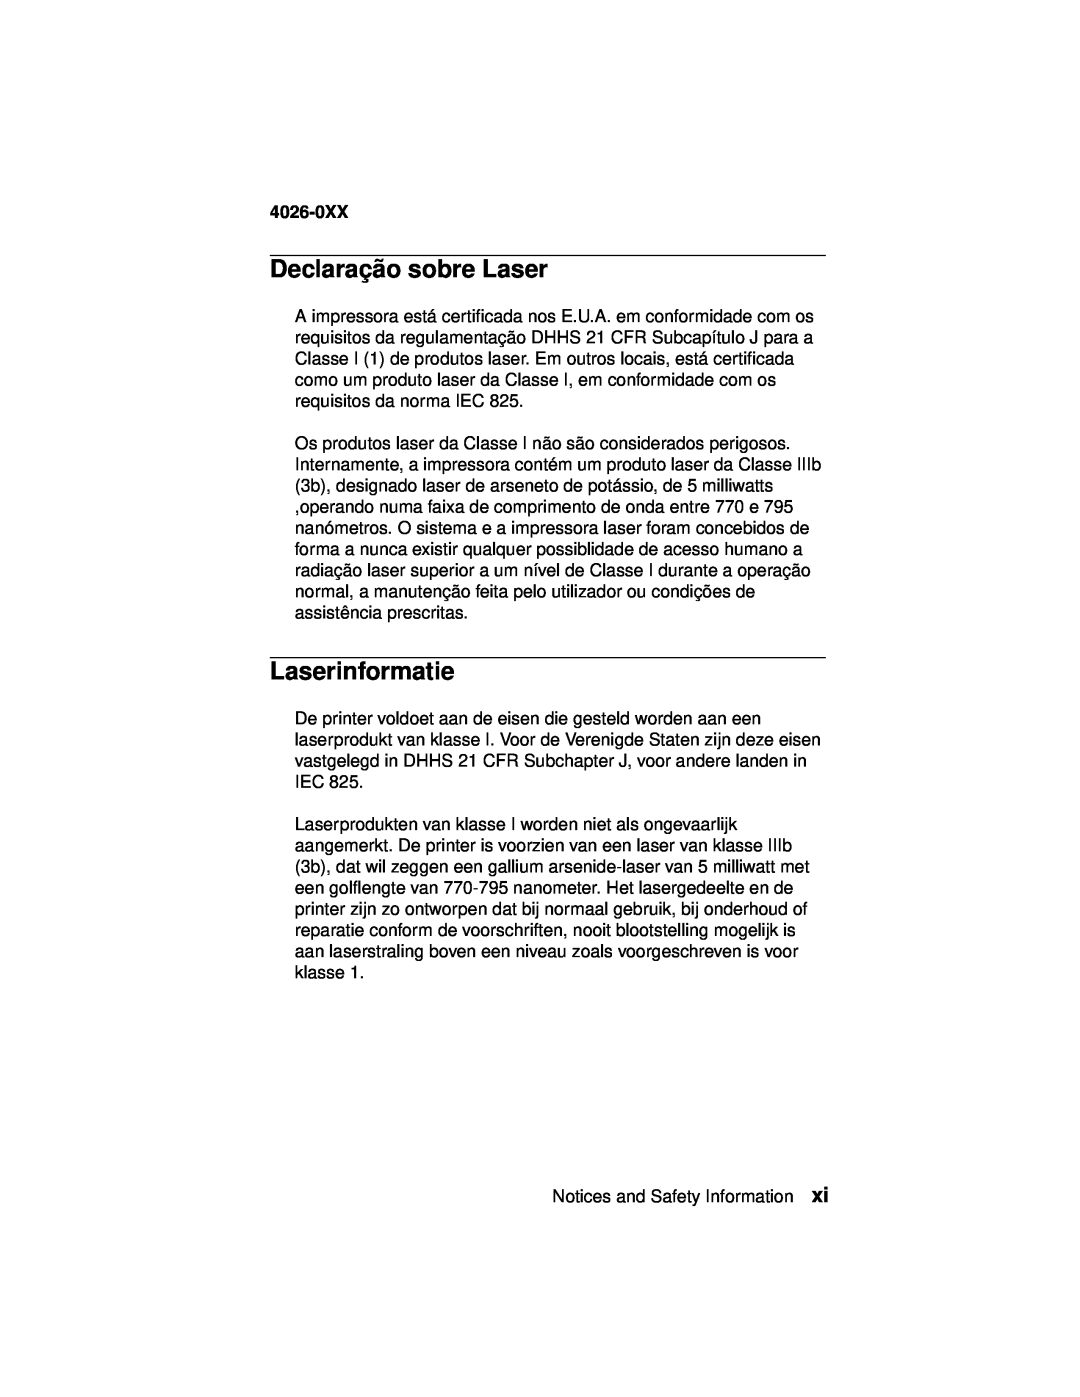 Lexmark OptraTM manual Declaração sobre Laser, Laserinformatie, 4026-0XX 